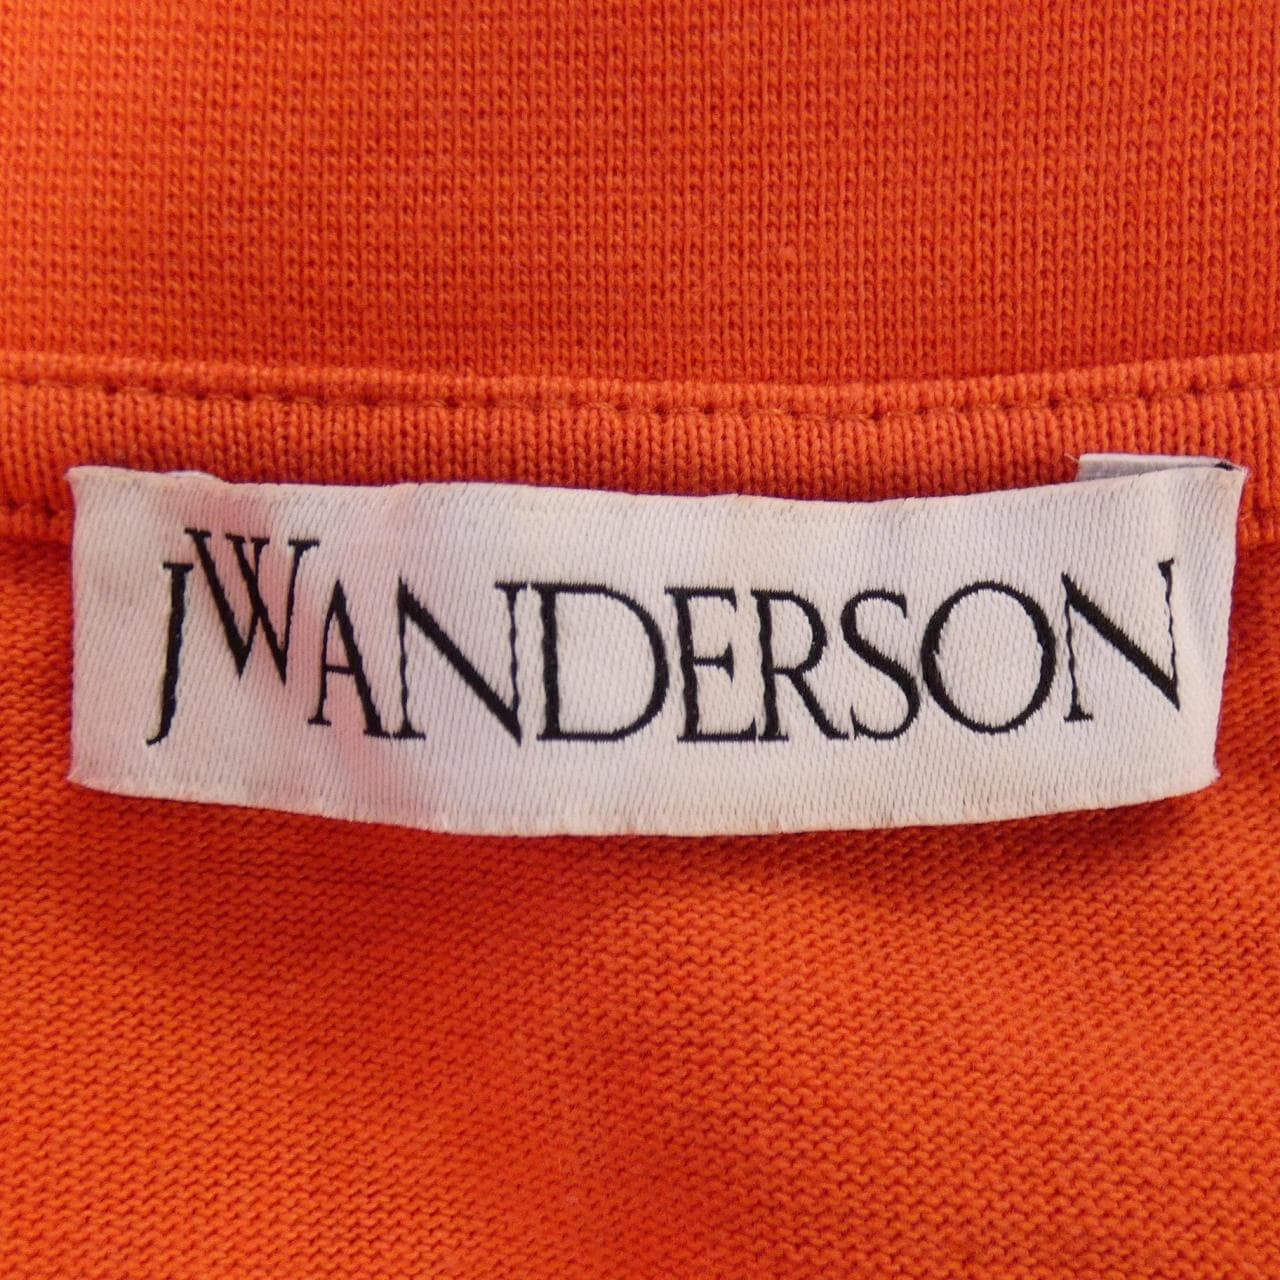 Jay Double Anderson JWANDERSON T-shirt